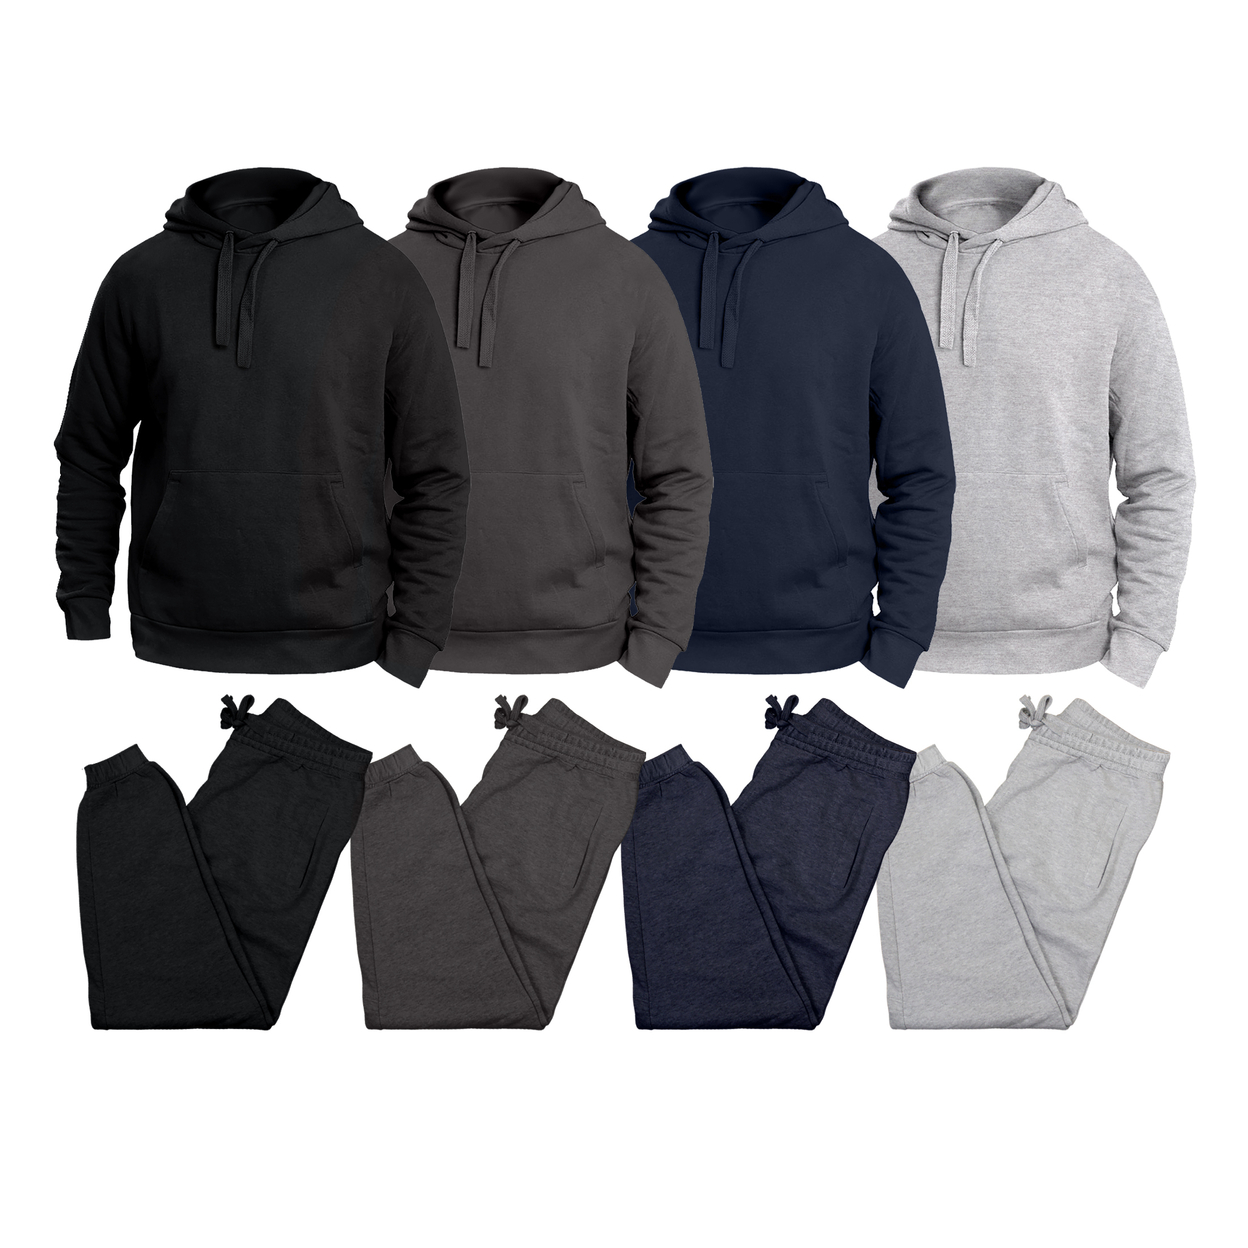 Multi-Pack: Big & Tall Men's Winter Warm Cozy Athletic Fleece Lined Multi-Pocket Cargo Sweatsuit - Black, 2-pack, 3xl